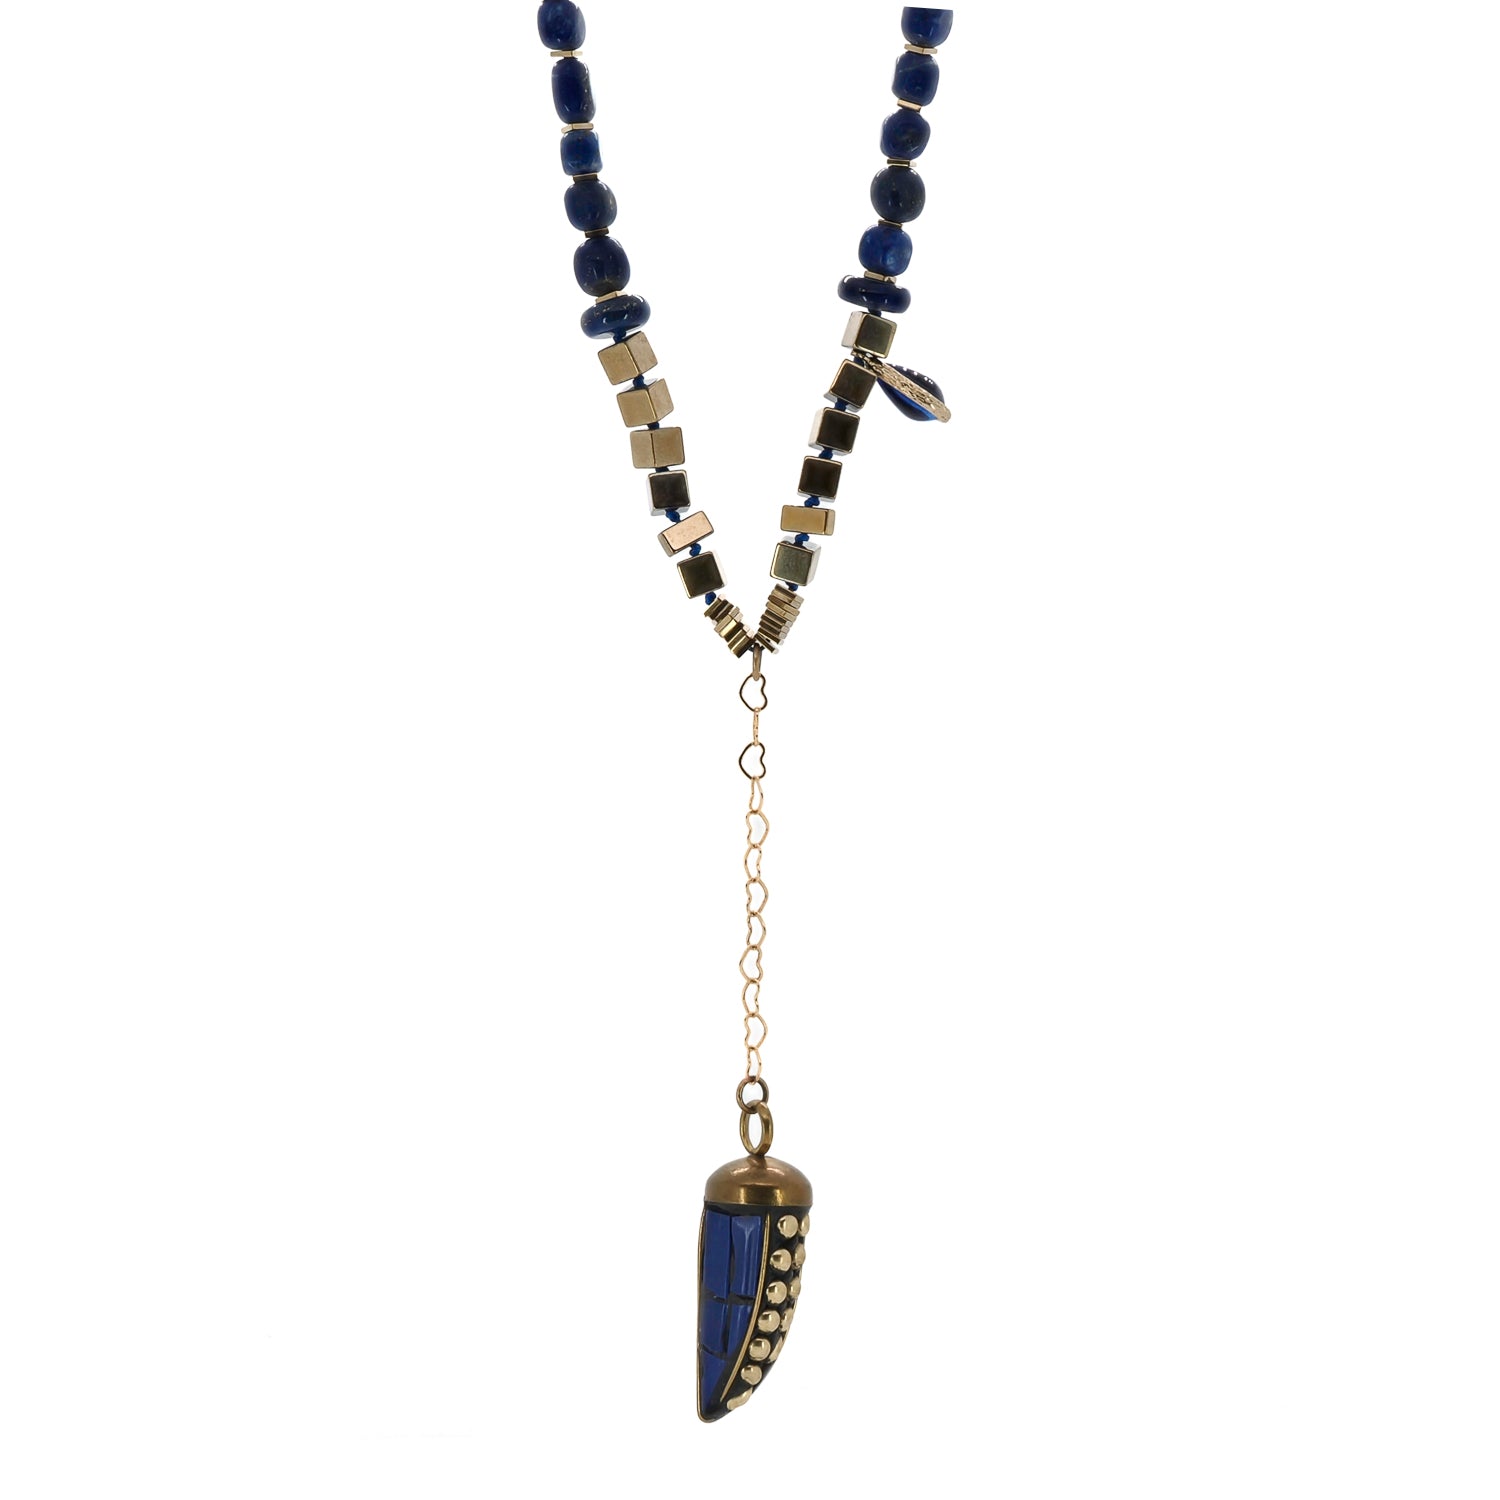 Exquisite Lapis Lazuli and Gold Hematite Beads